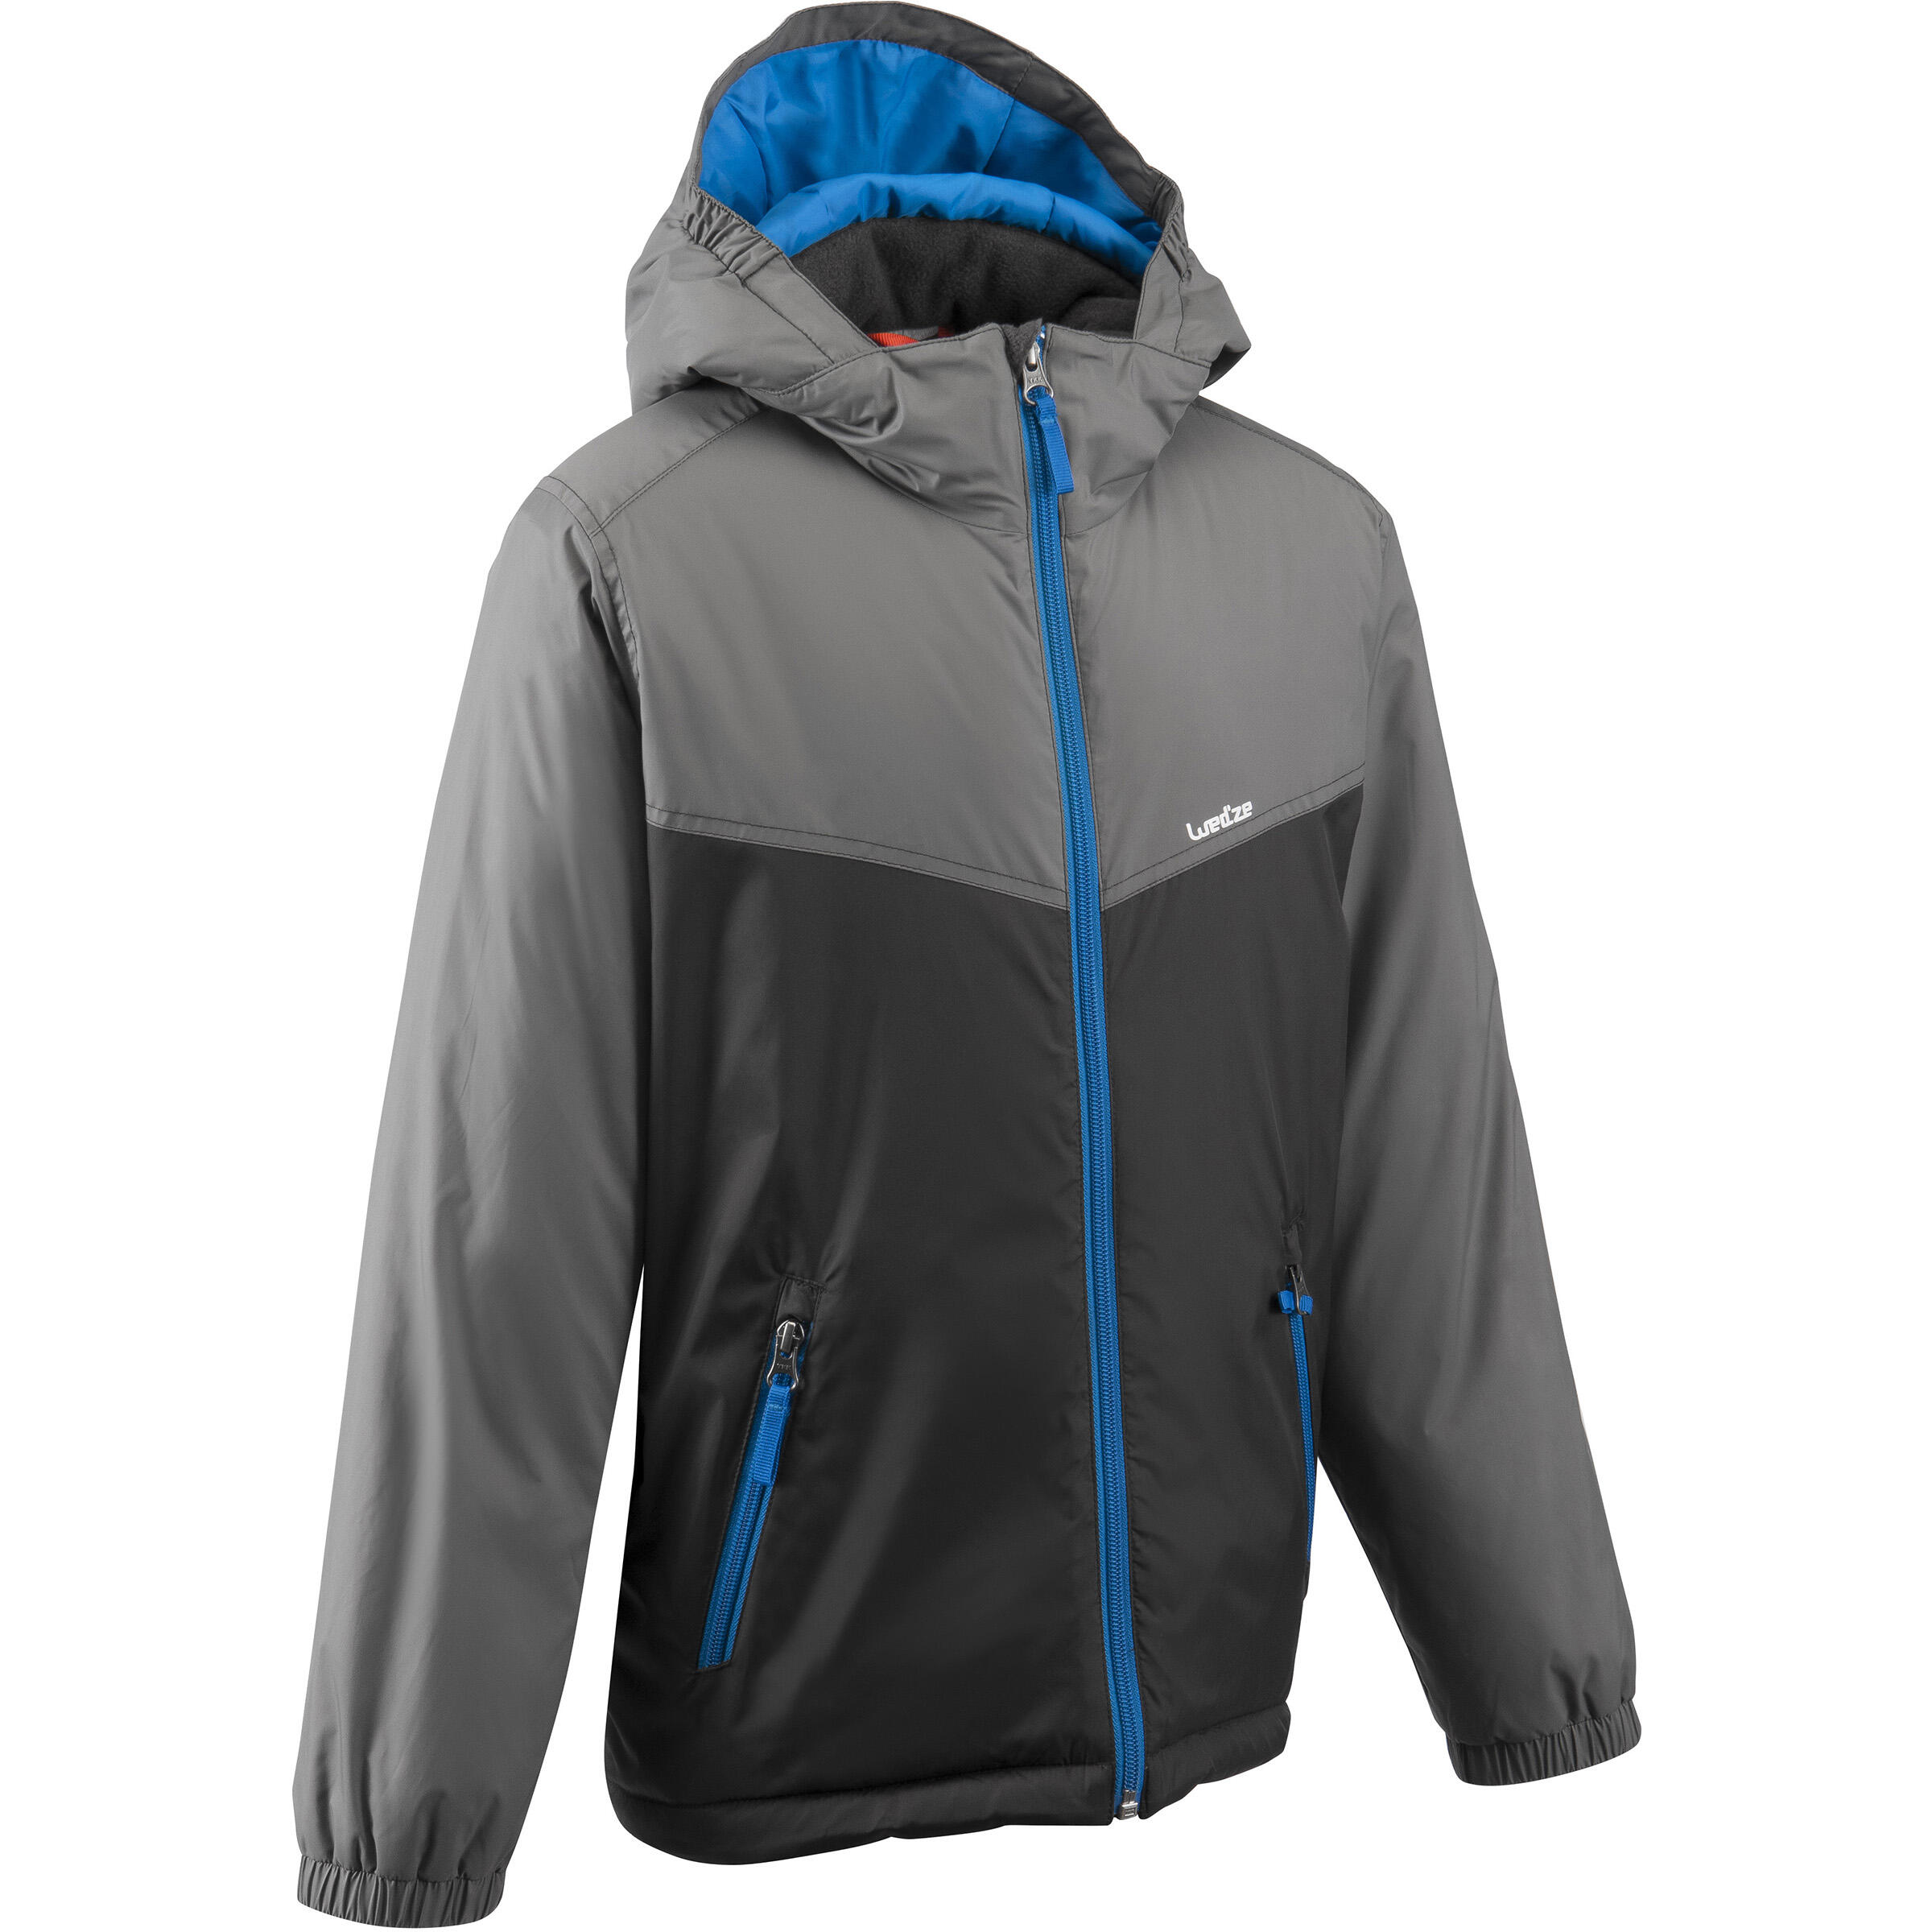 decathlon ski jacket review